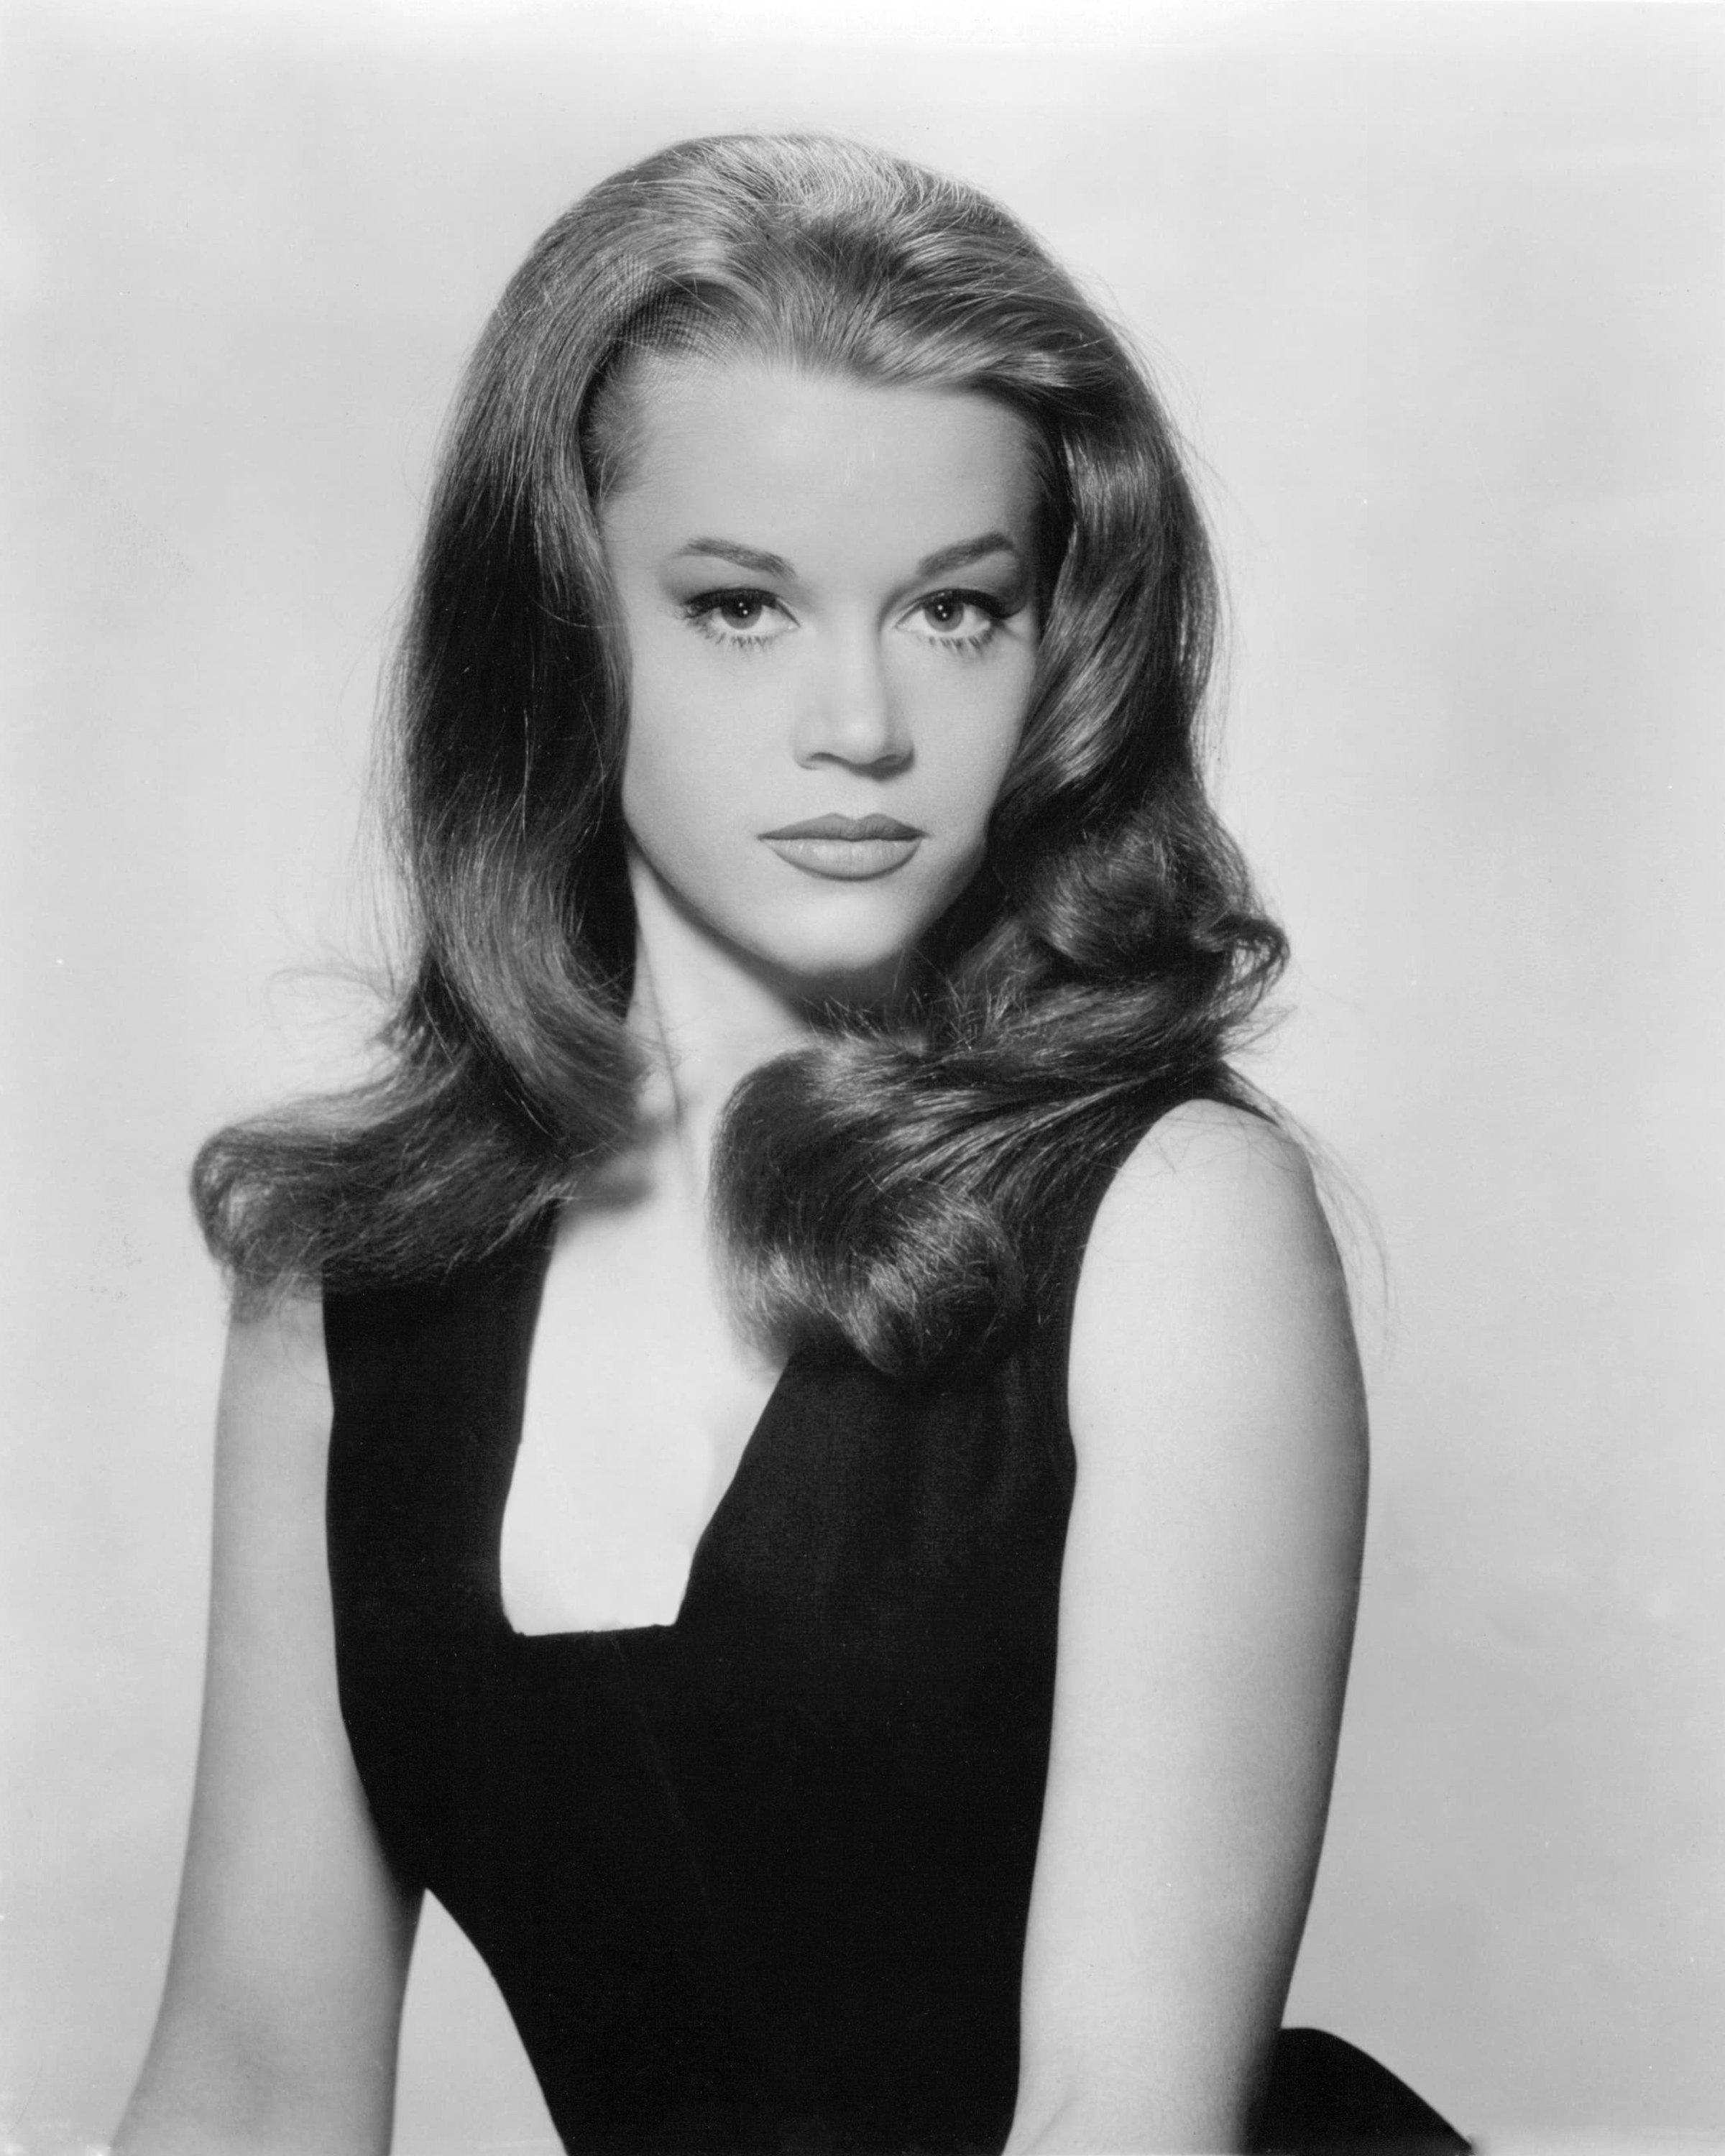 Young Jane Fonda posing in a black dress